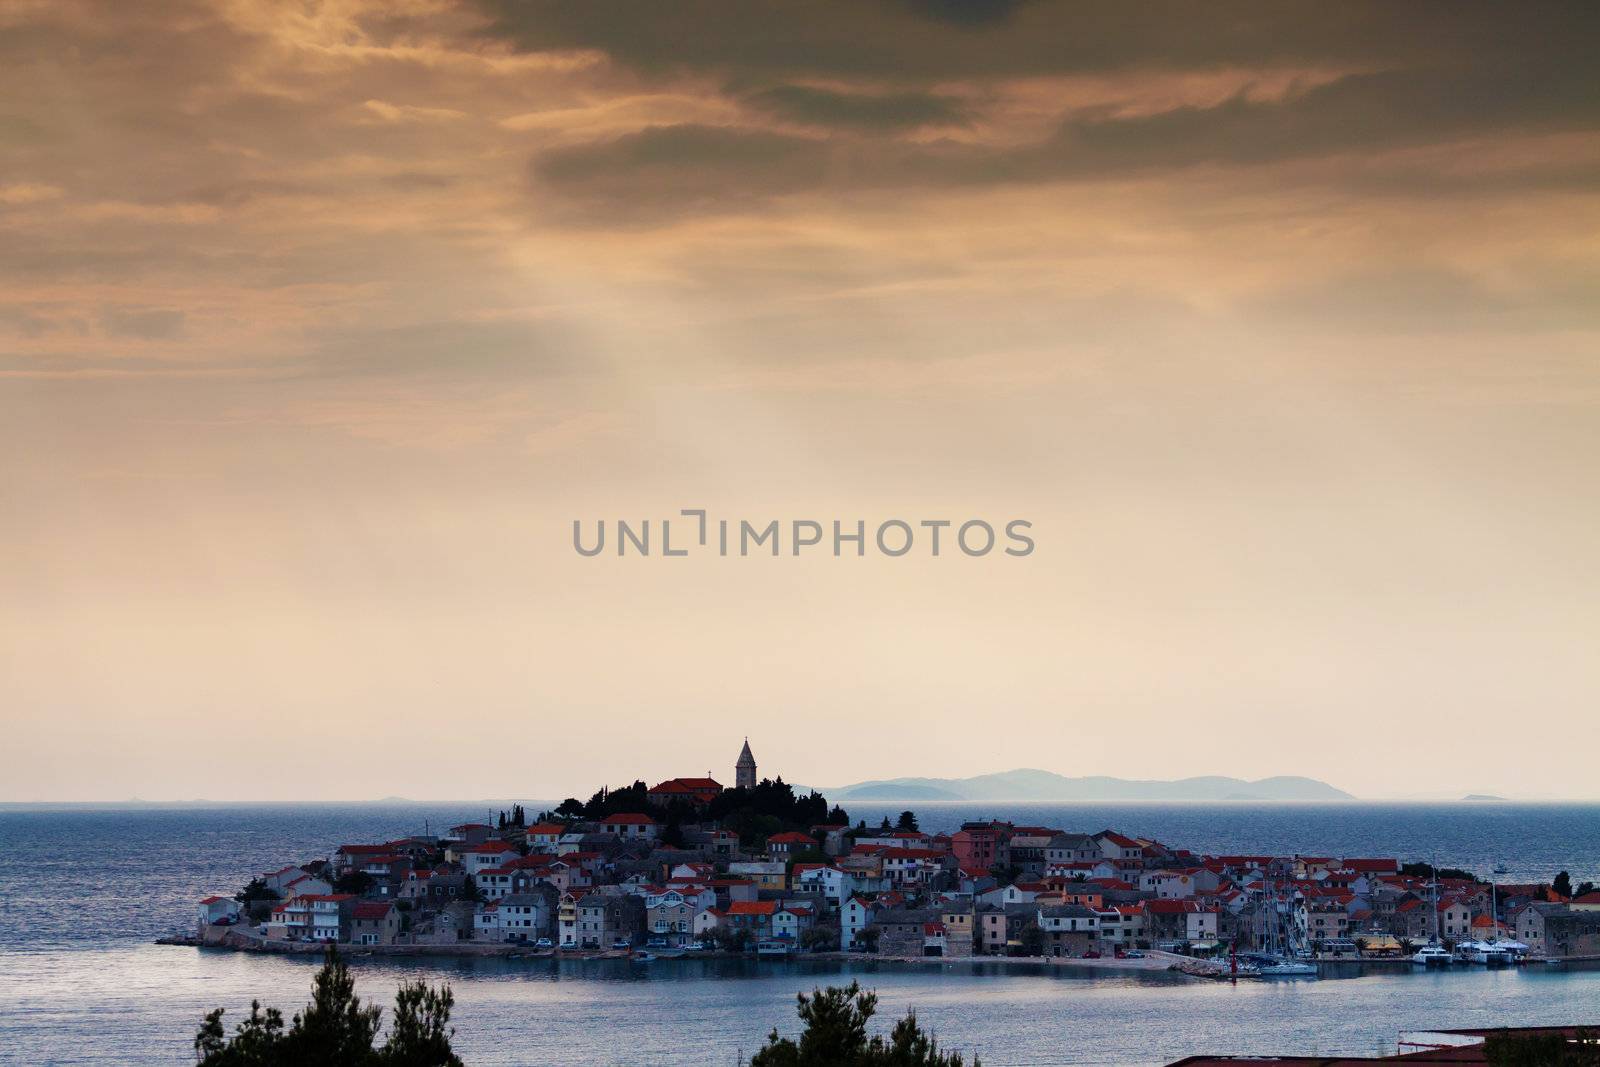 City of Primosten, Croatia